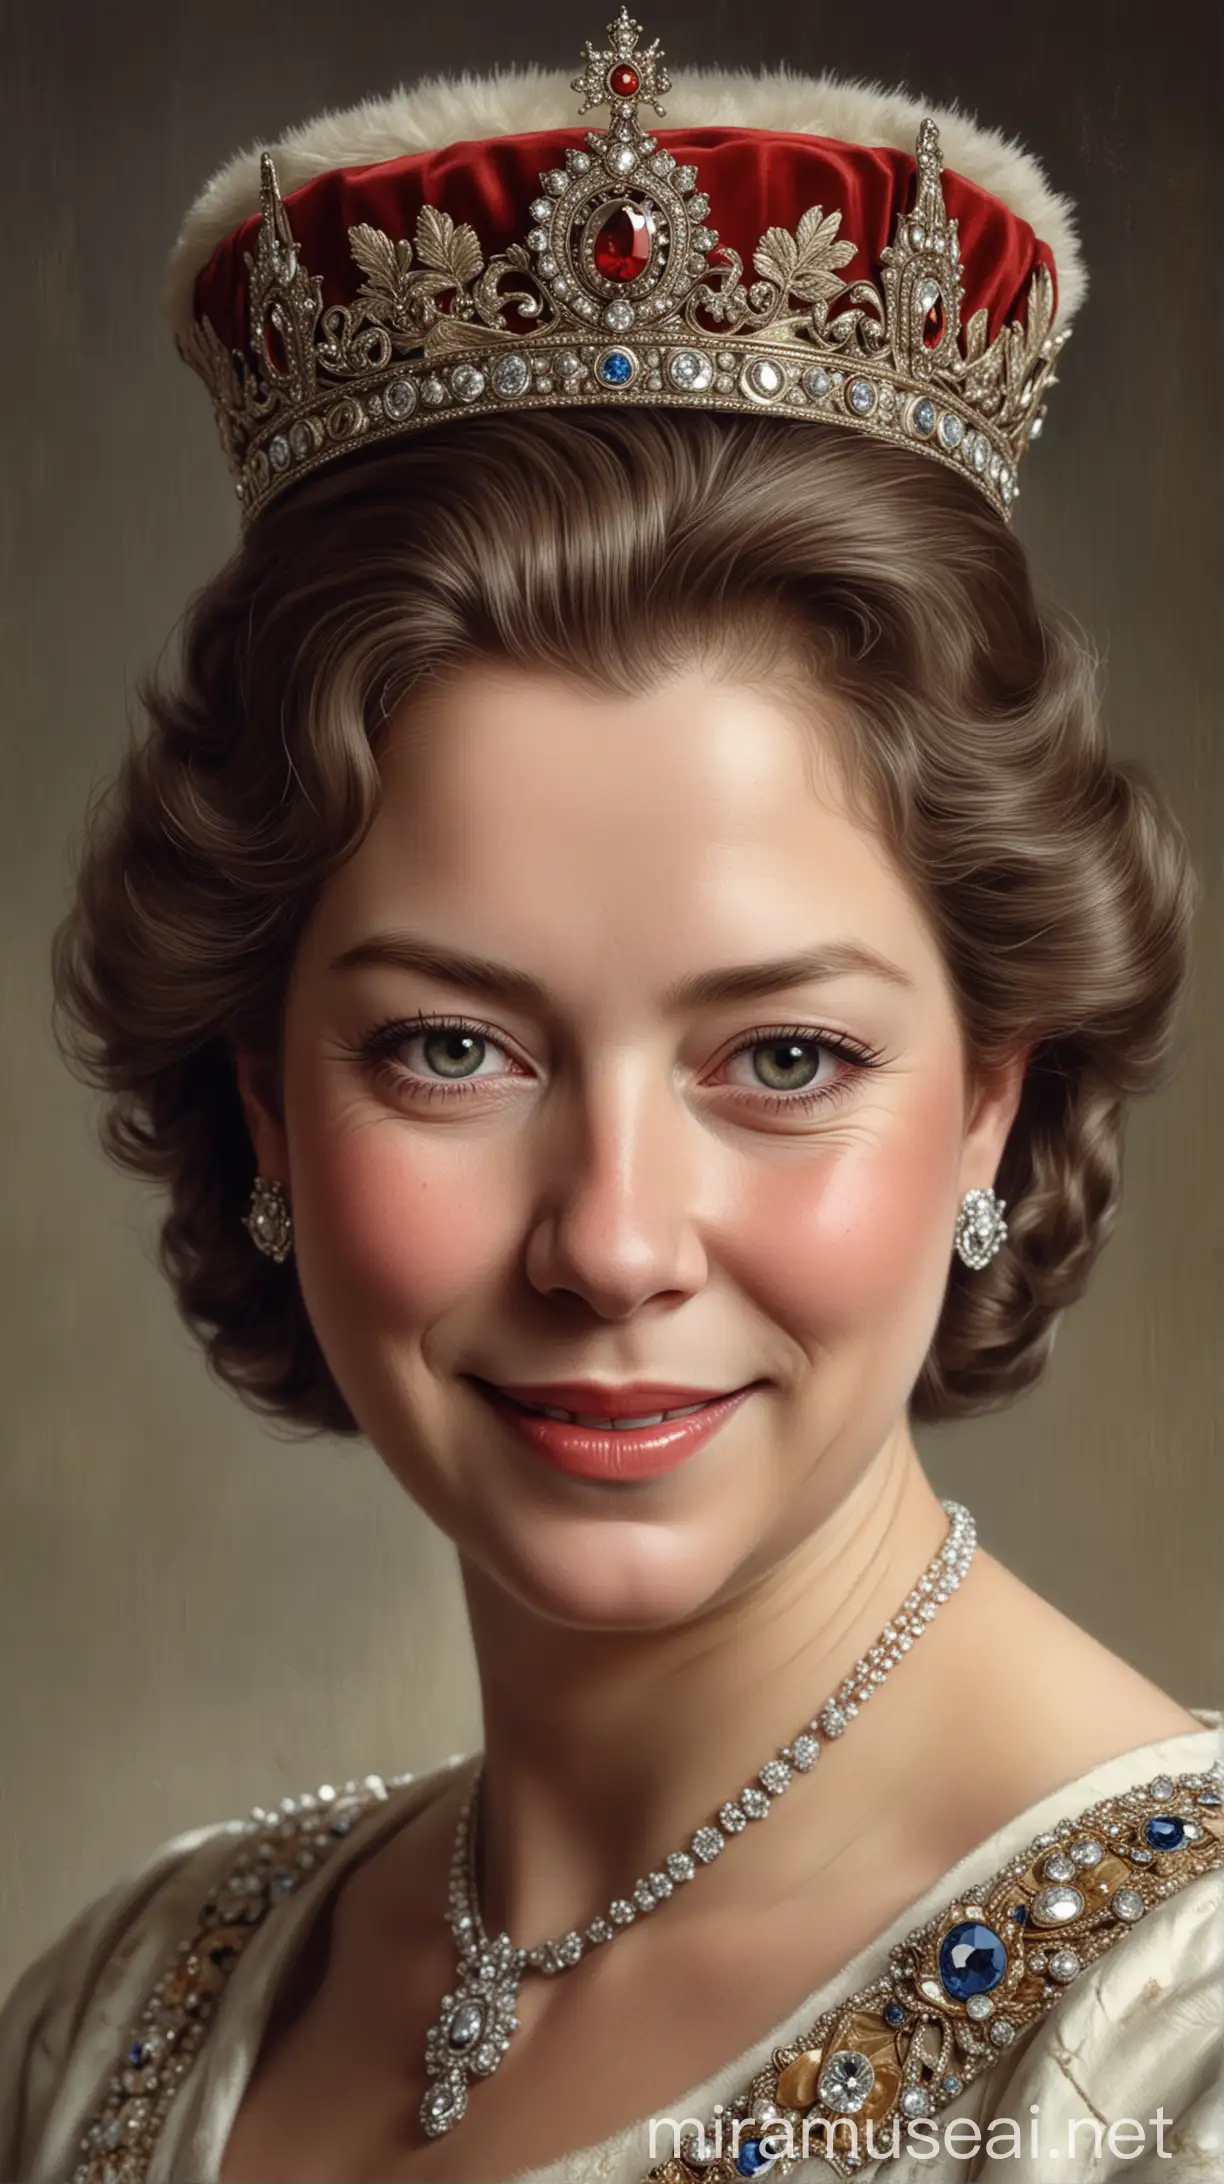 Young Queen Elizabeth II Portrait Regal Majesty with a Subtle Smile